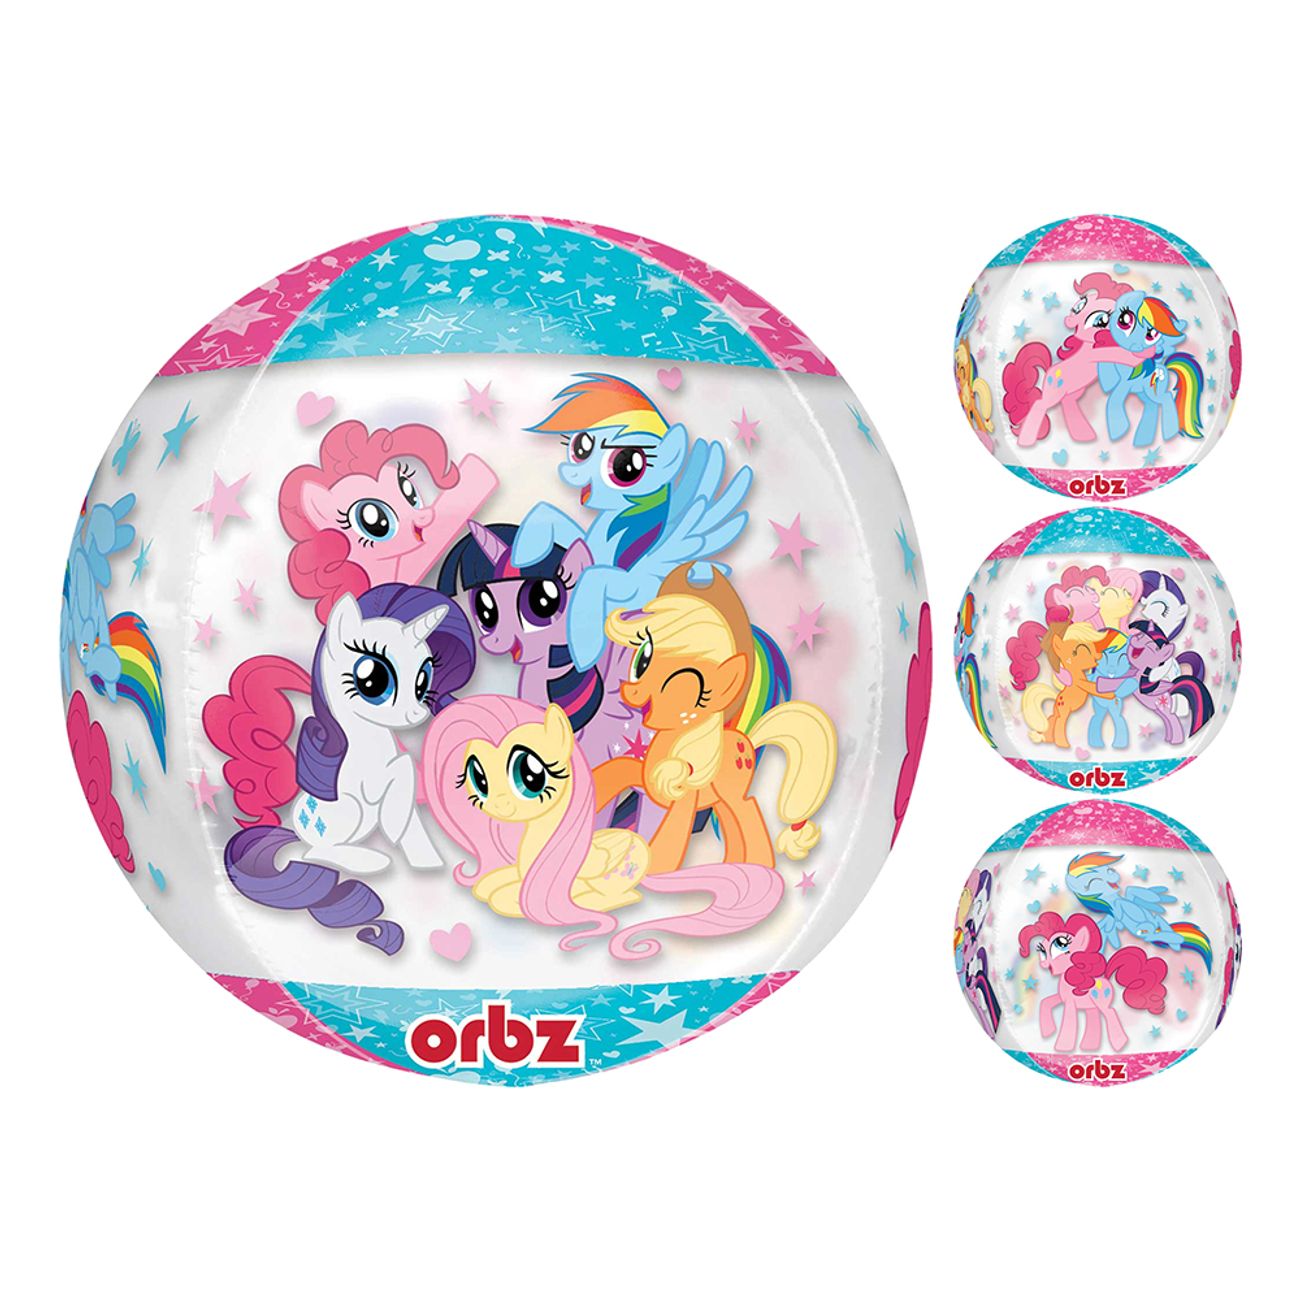 folieballong-my-little-pony-orbz-1